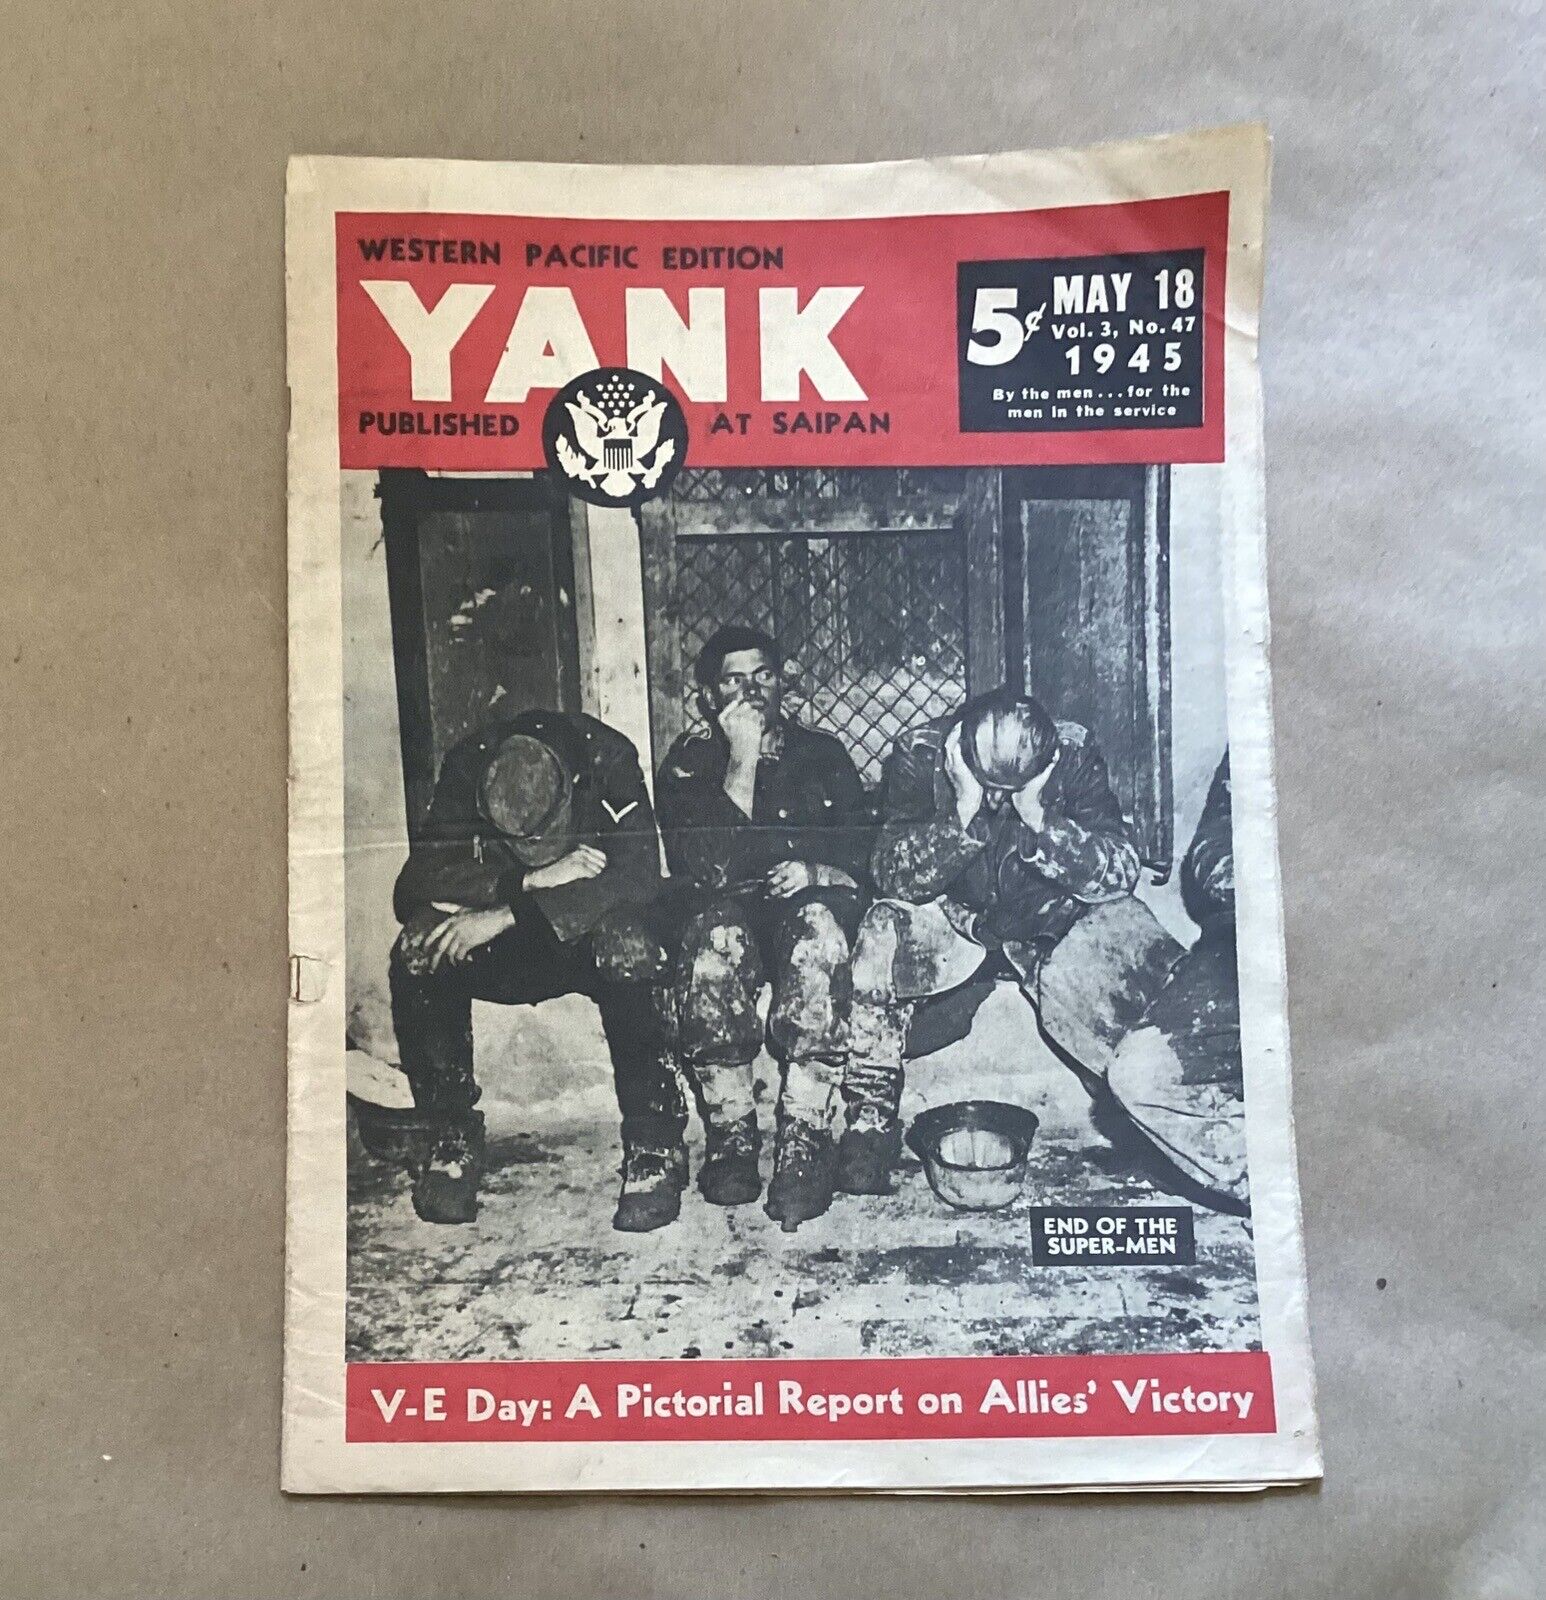 WWII Yank Western Pacific Edition Magazine, May 18, 1945, Vol. 3, No. 47, Saipan